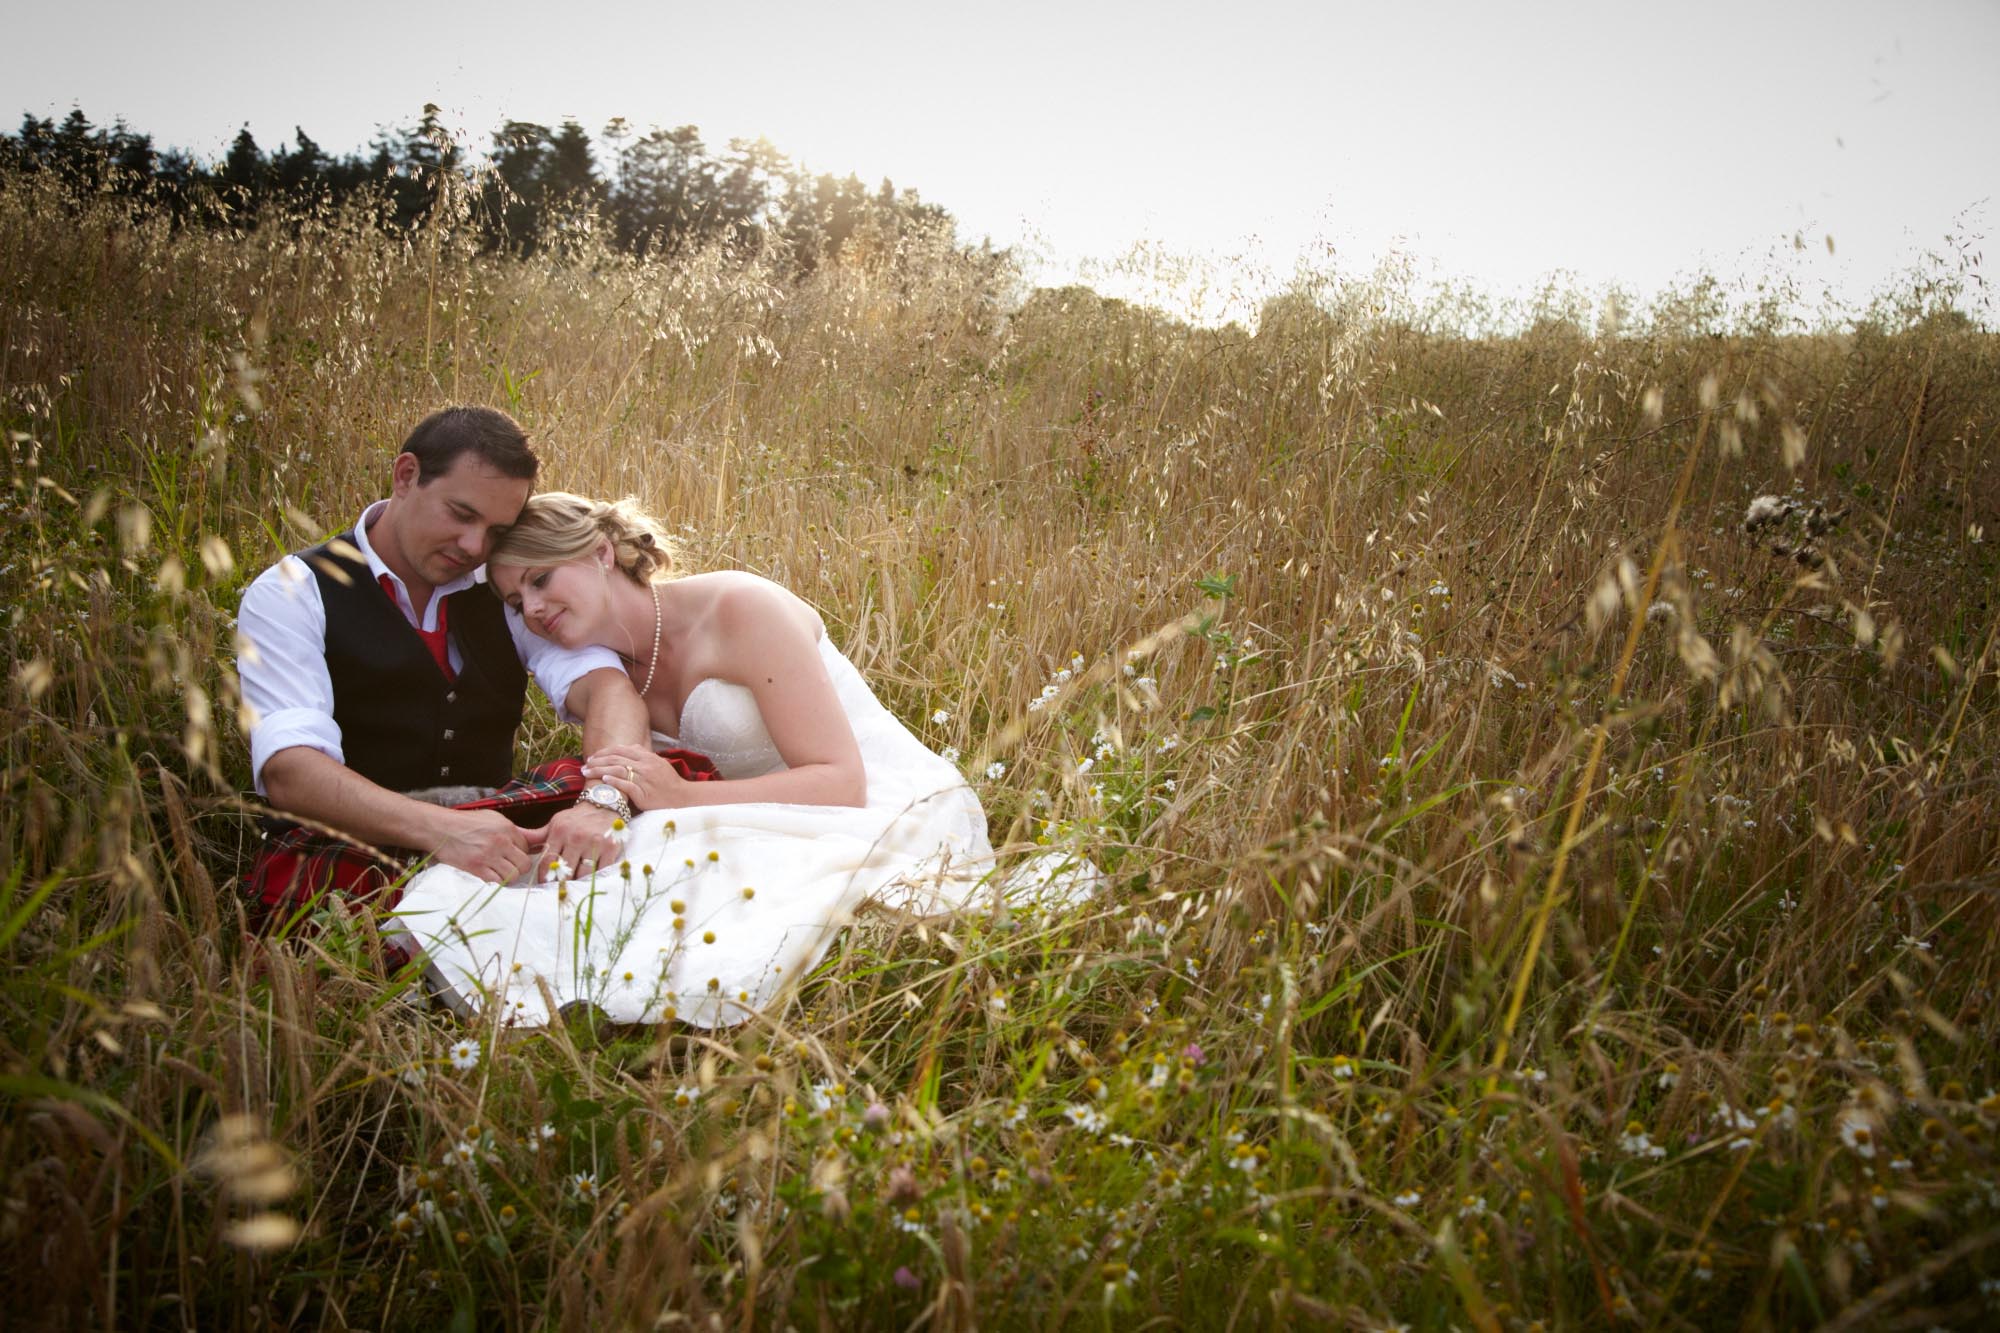 Bride & Groom Sitting in a Field - Romantic Weddings at Huntstile Farm